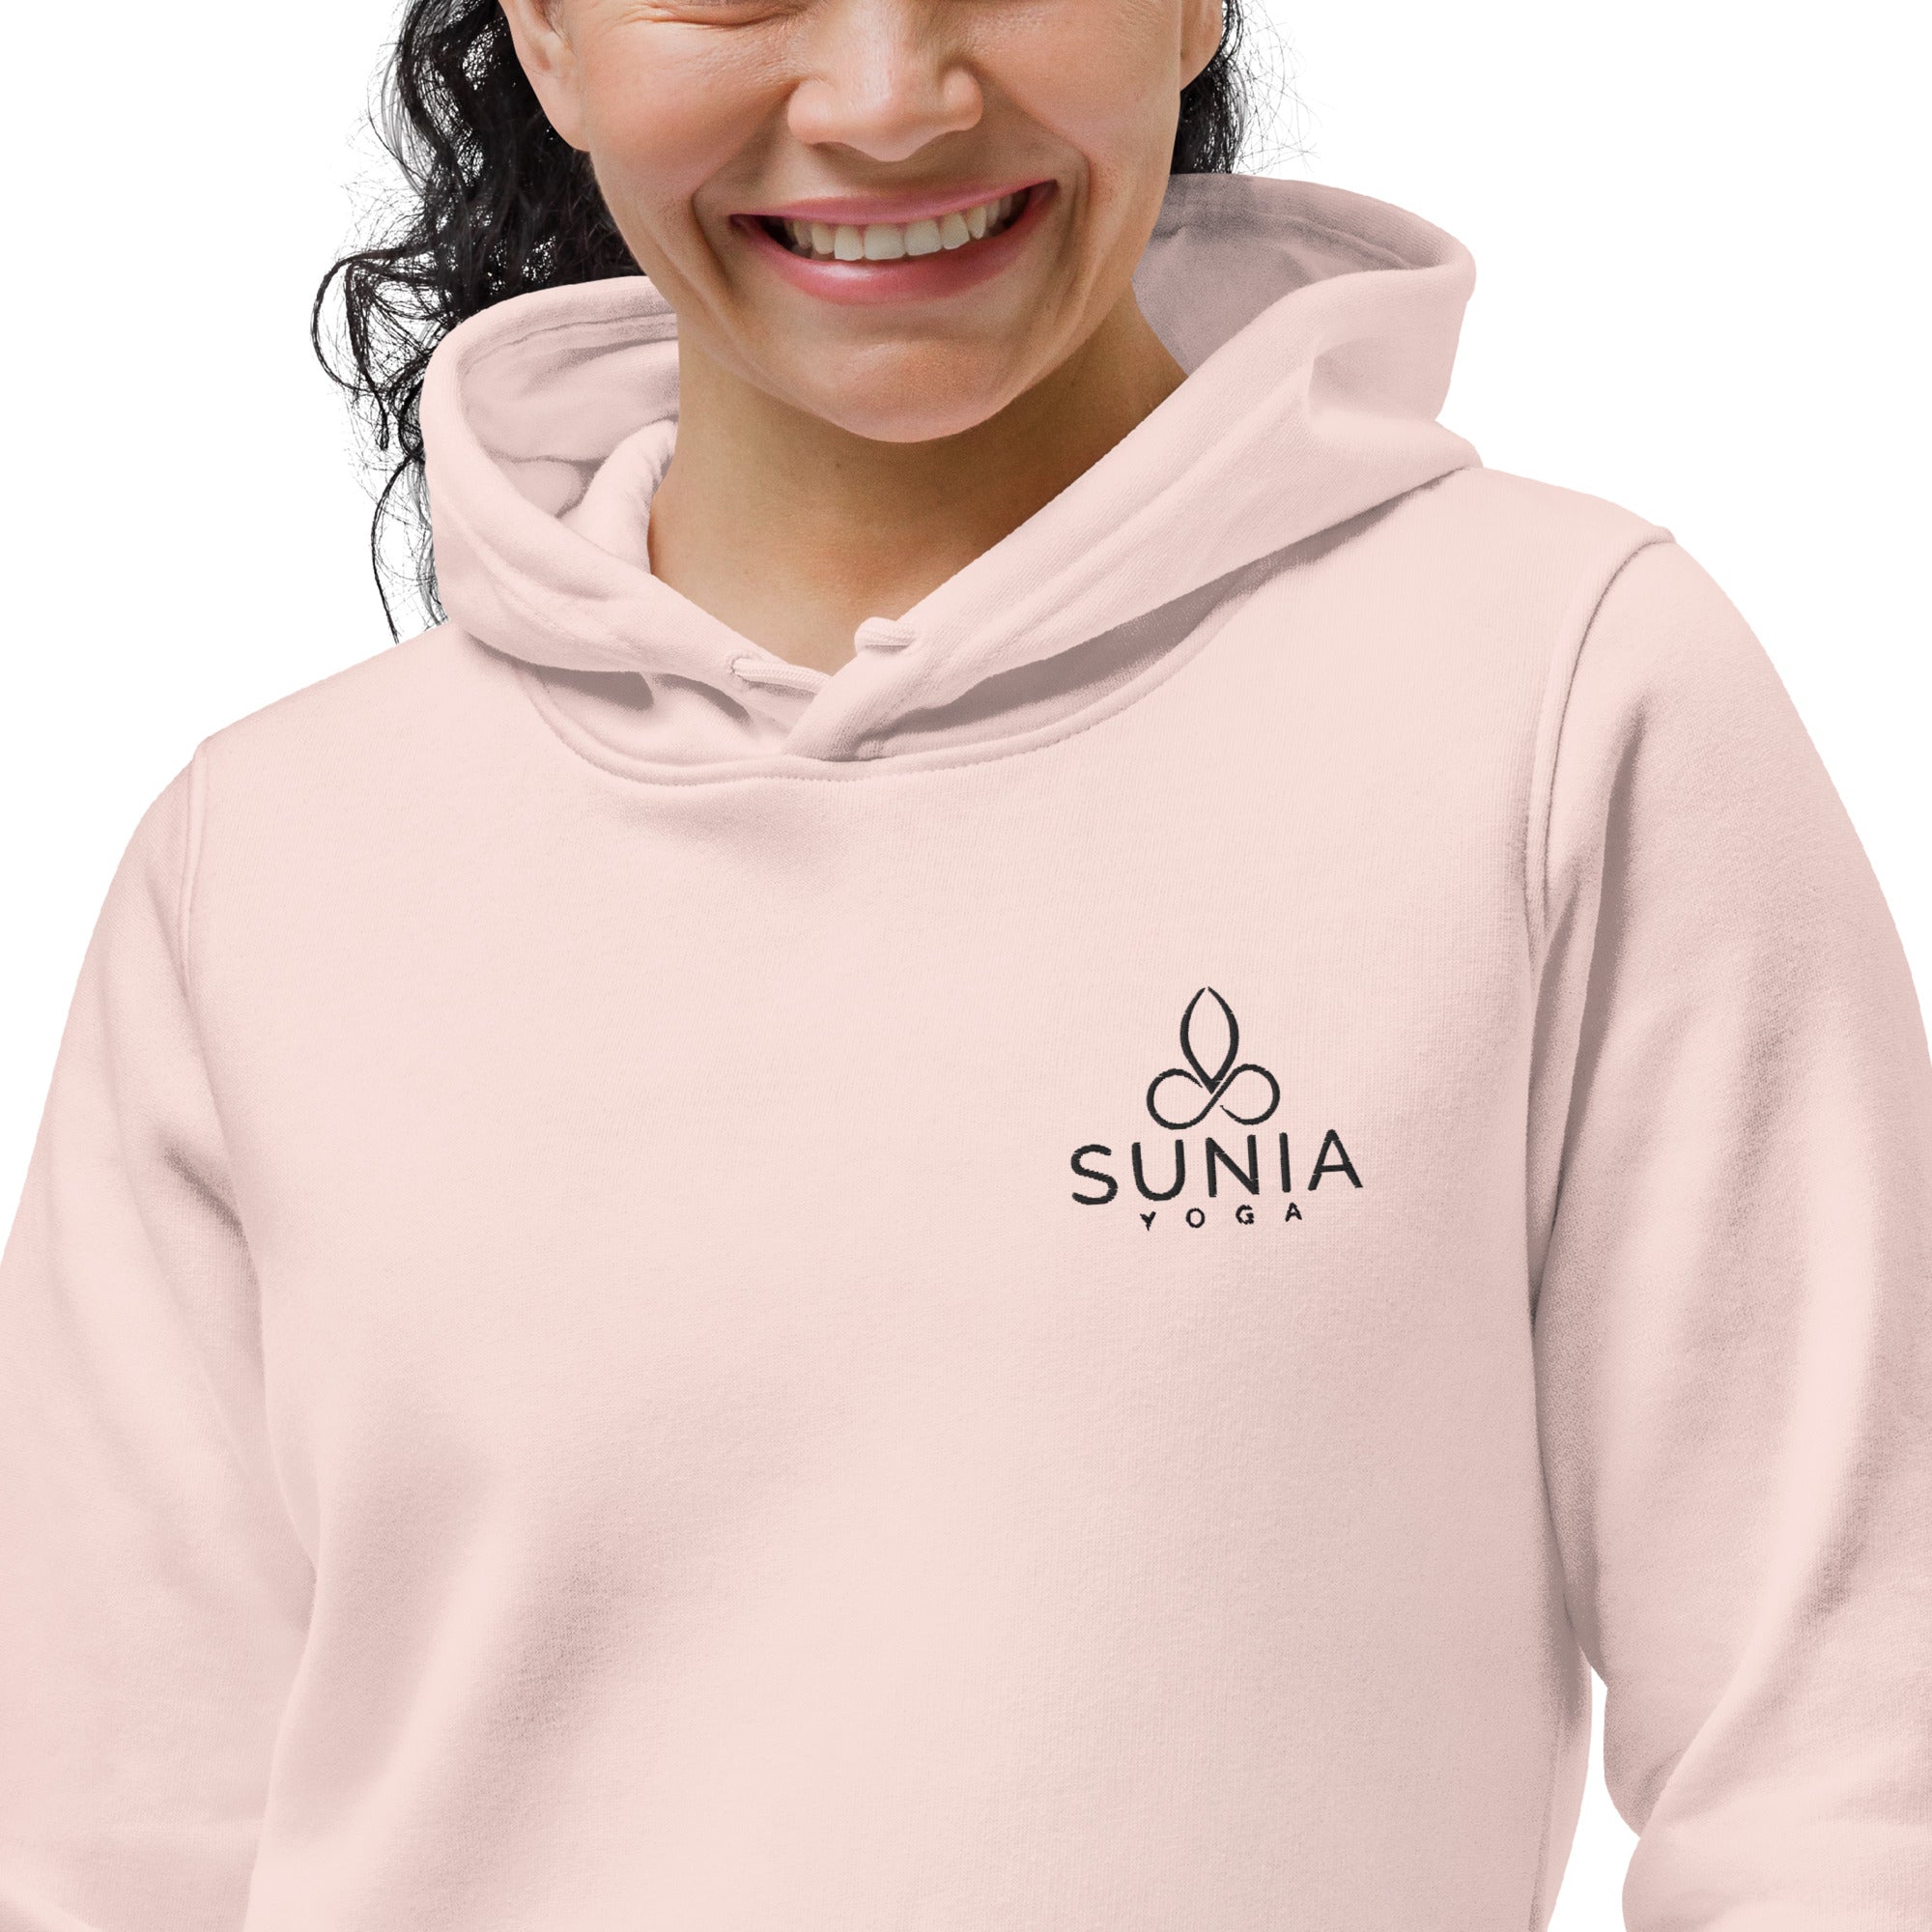 Sunia Yoga Organic Embroidery Fitted Hoodie